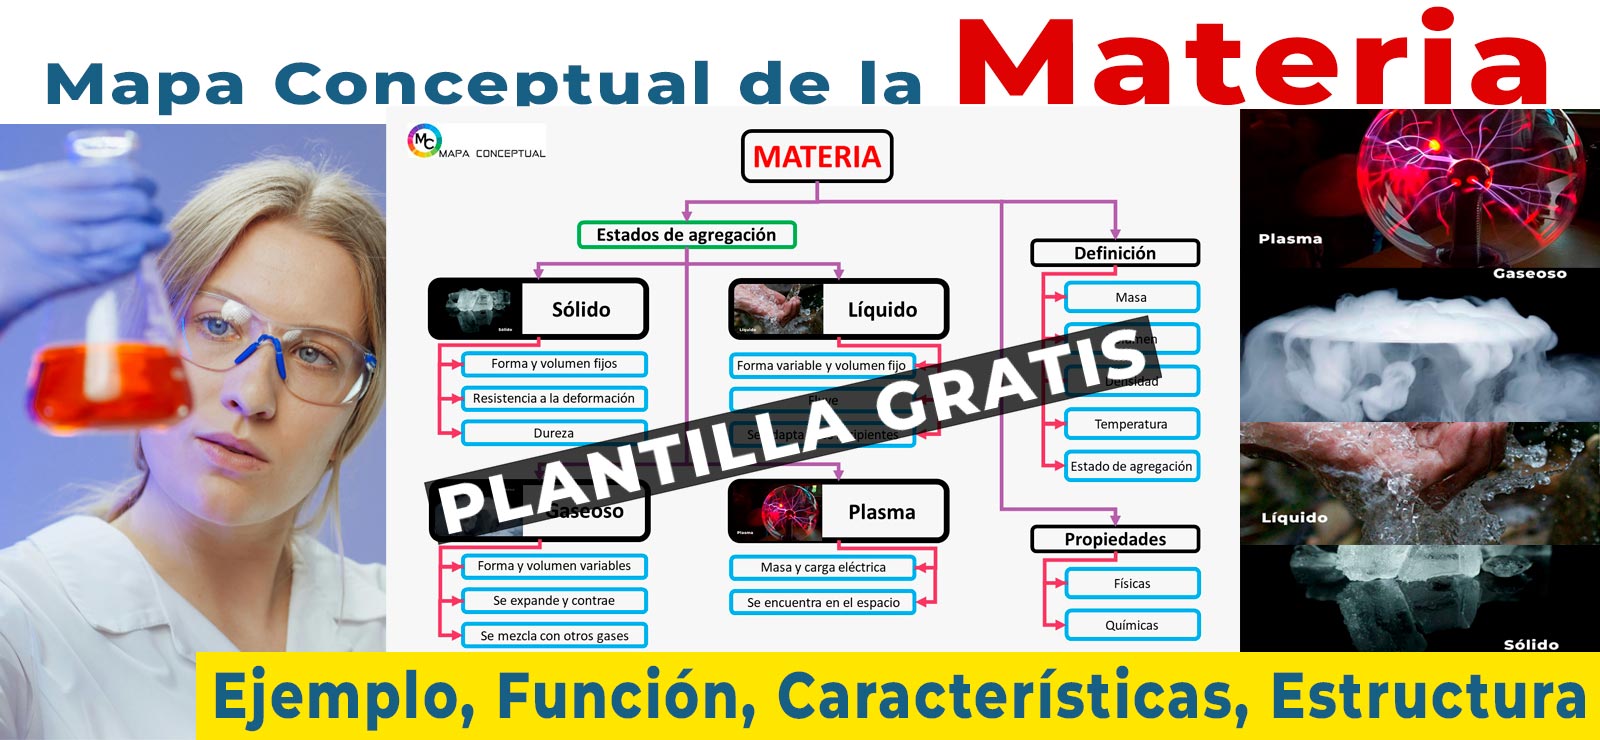 Mapa Conceptual de la Materia | Sitio Web Oficial mapaconceptual.com.es